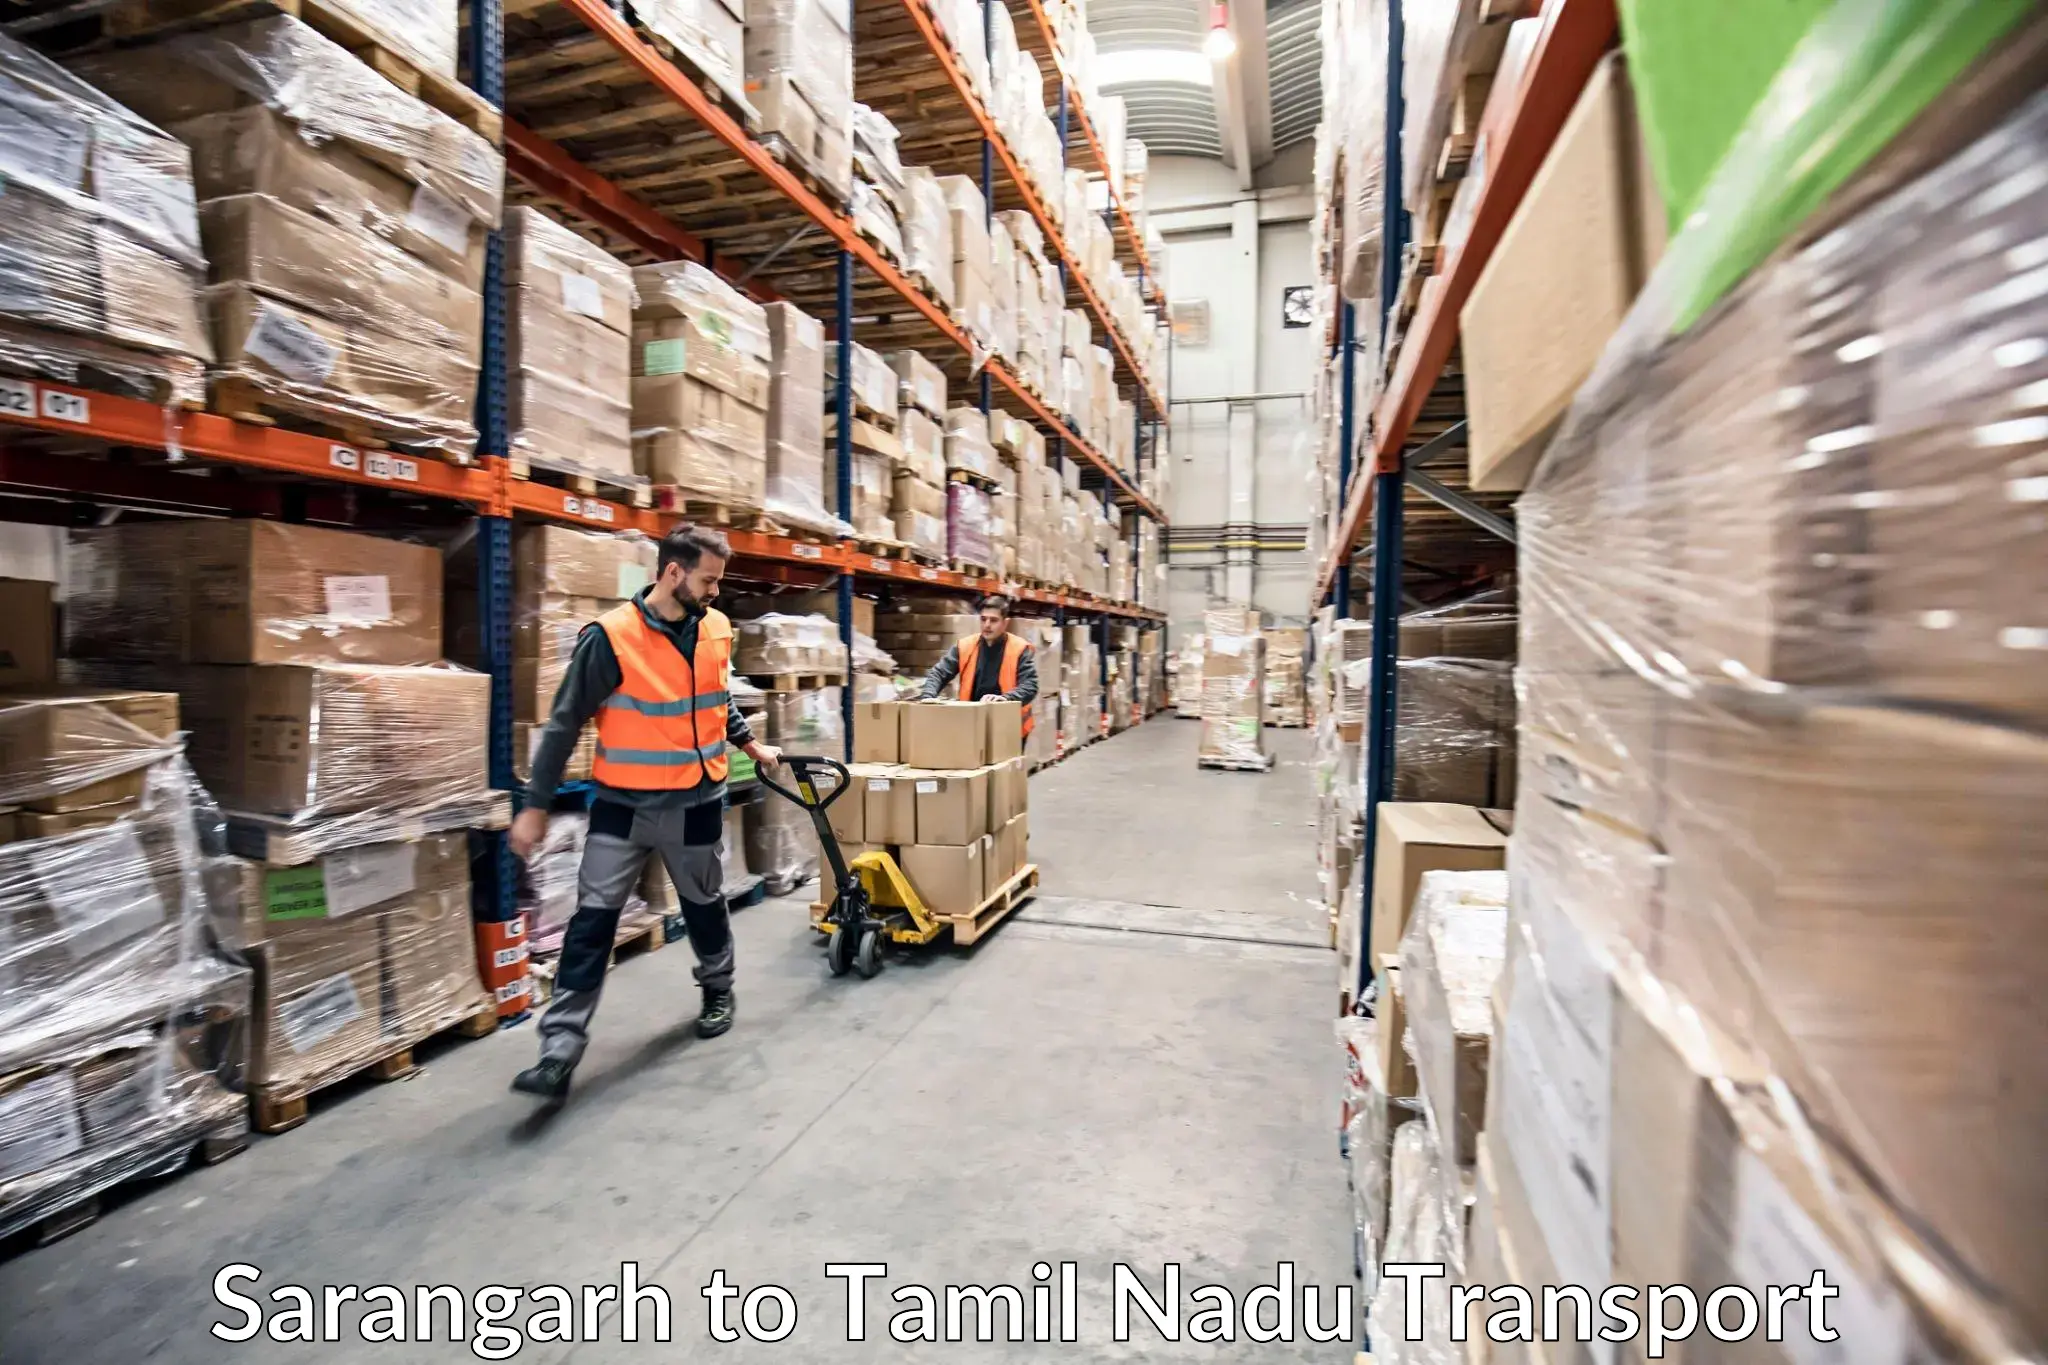 Truck transport companies in India Sarangarh to Periyakulam